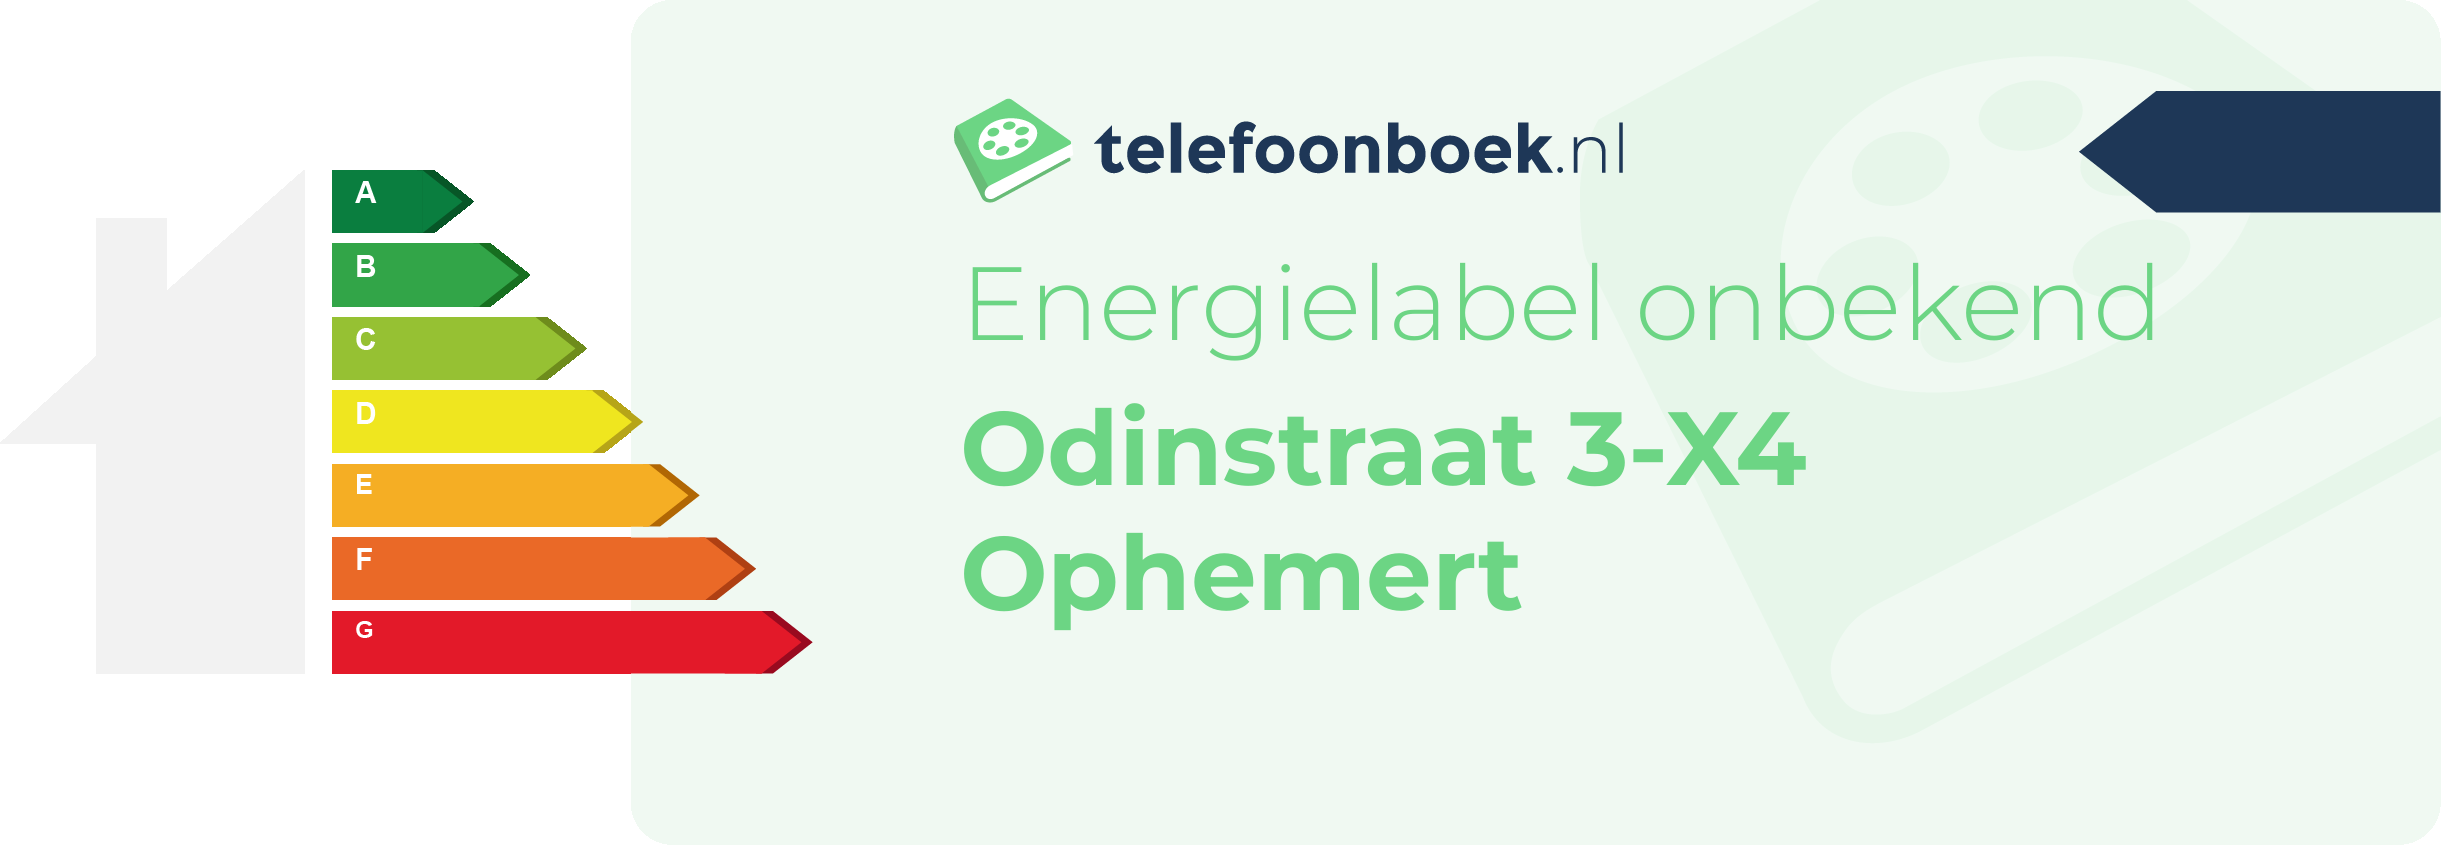 Energielabel Odinstraat 3-X4 Ophemert